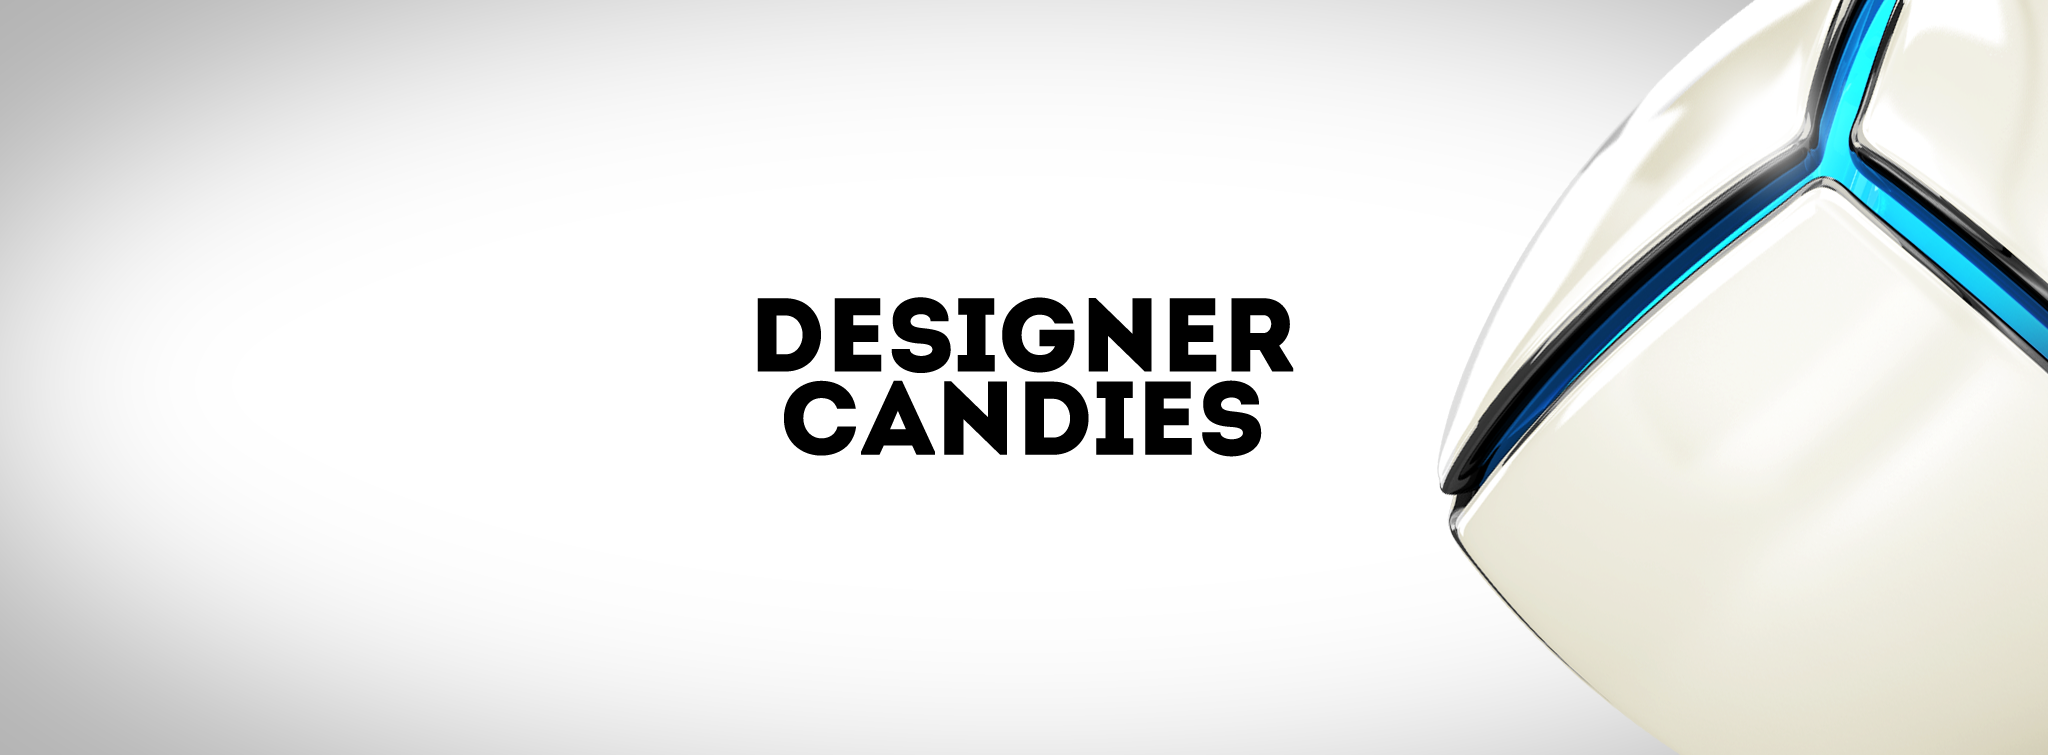 (c) Designercandies.net